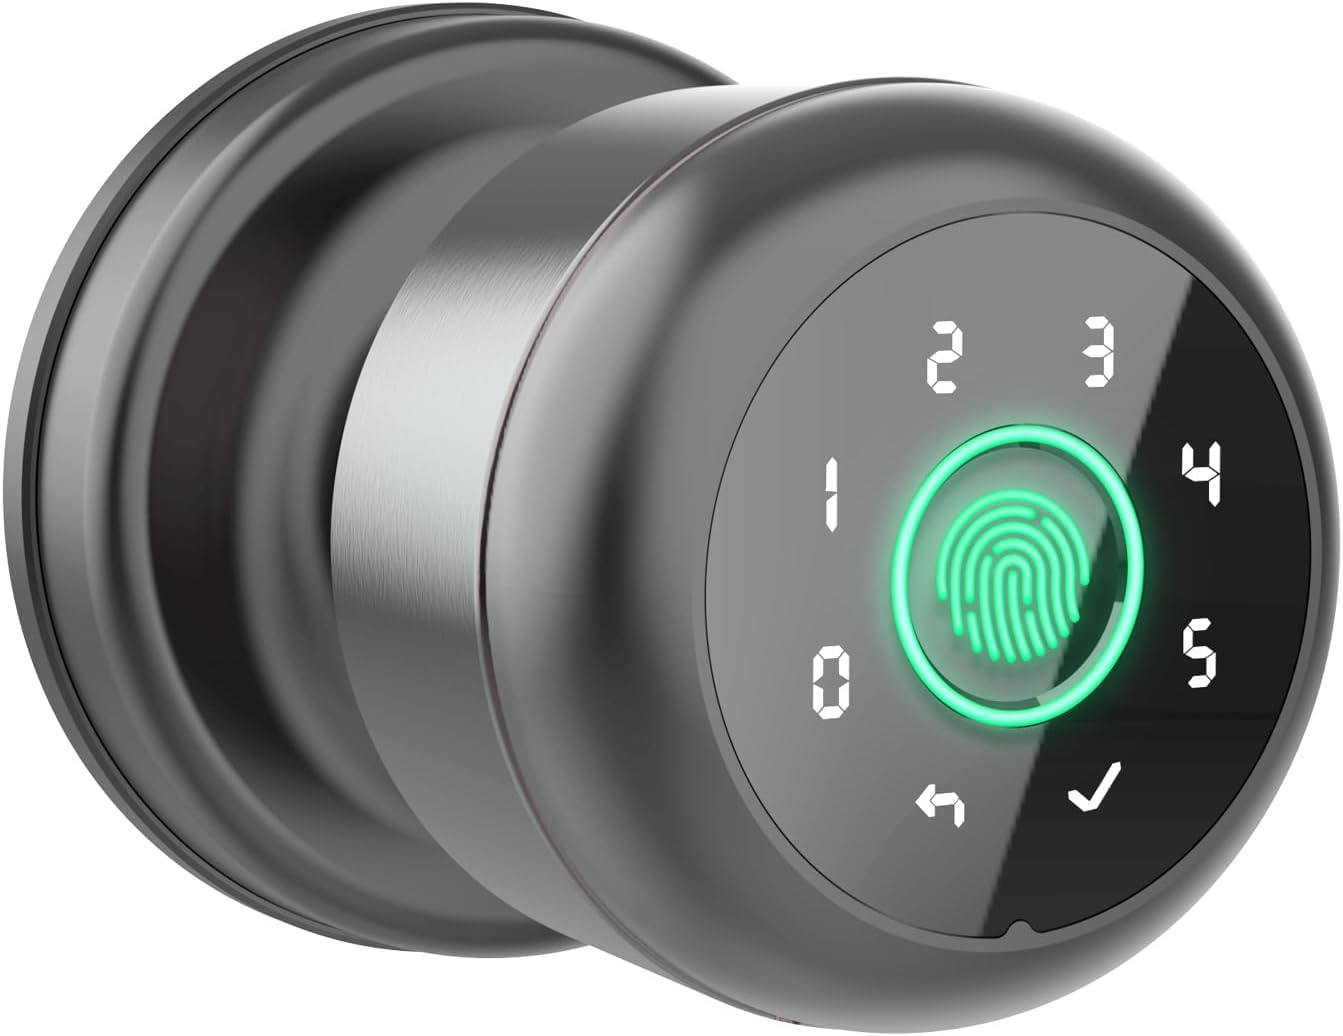 GHome Smart Door Knob Fingerprint Door Lock with Keypad, Biometric Smart Lock - App Control, Interior Door Knob with Key Great for Bedroom, Apartments, Offices and Hotels